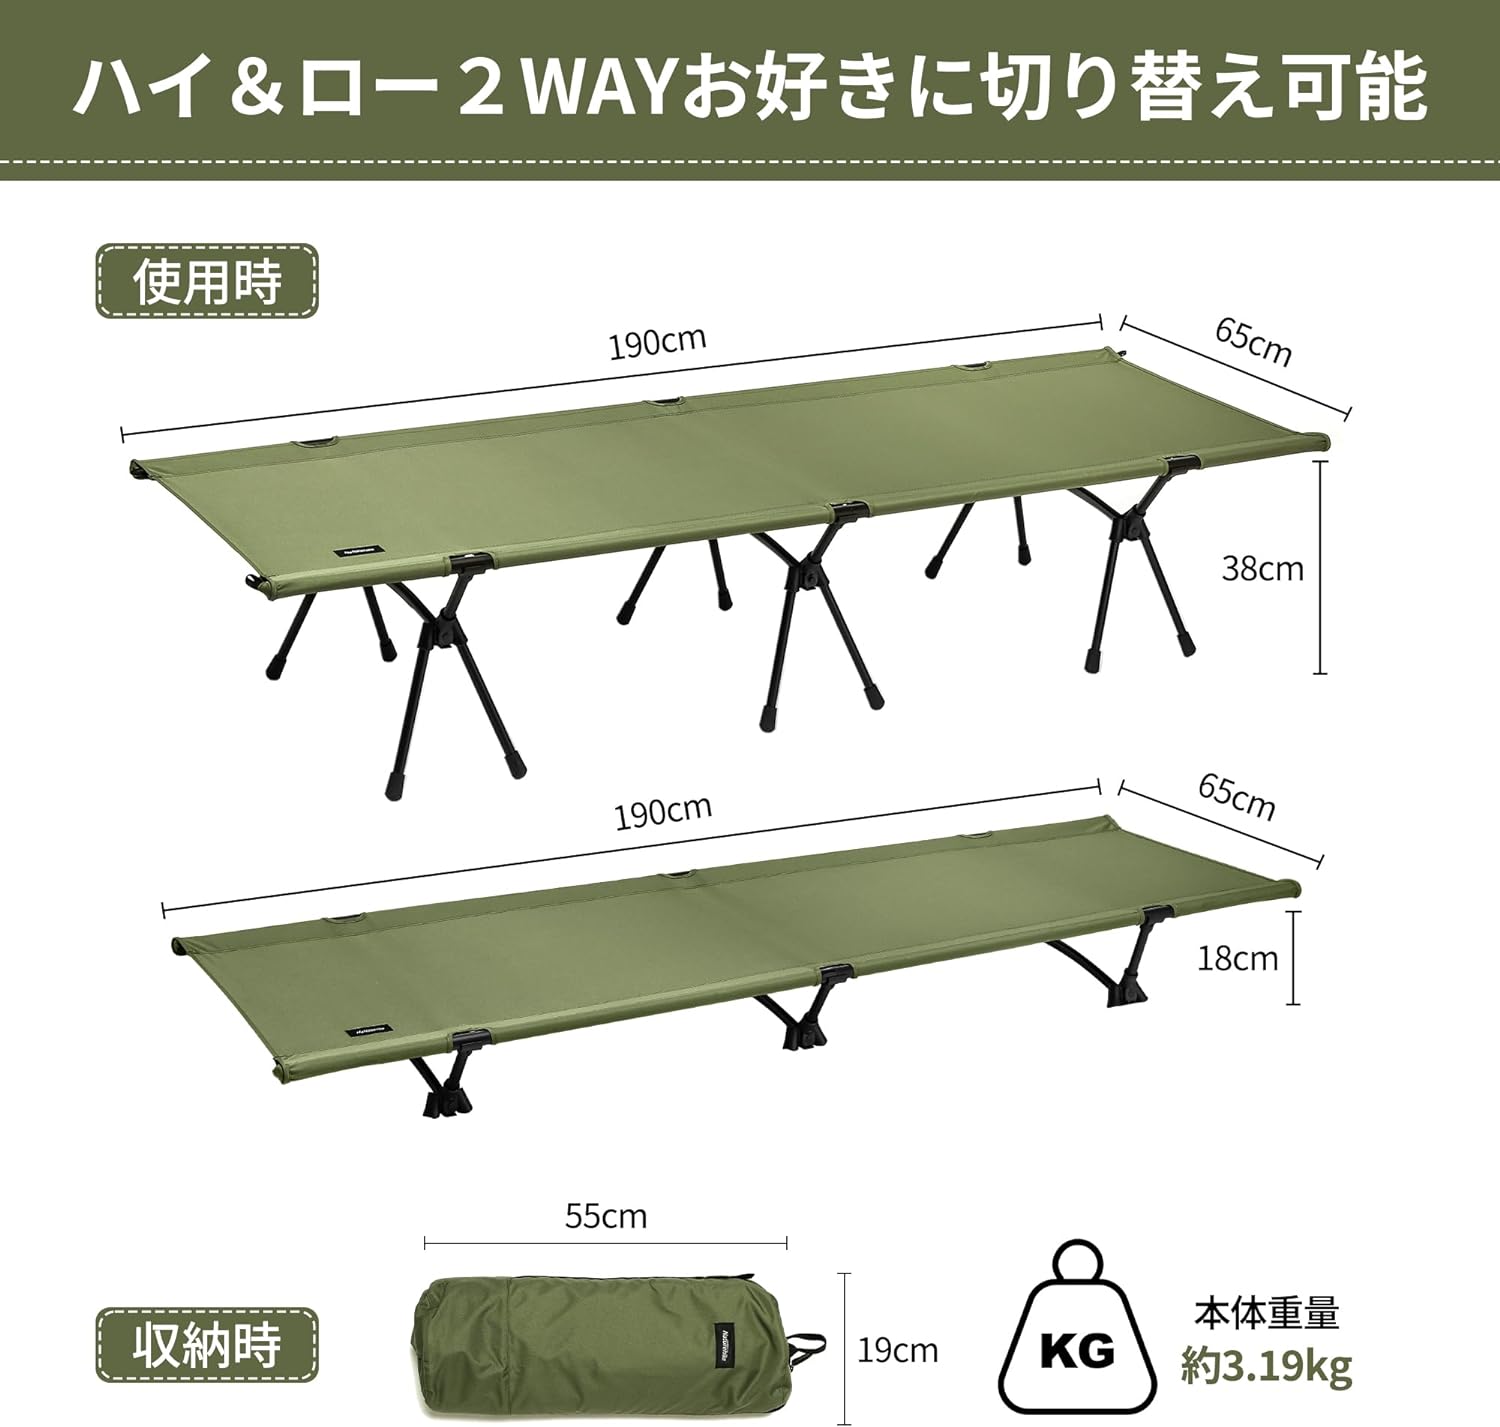 N【日本限定色】コット 2way キャンプ アウトドア ベッド 軽量 耐荷重 